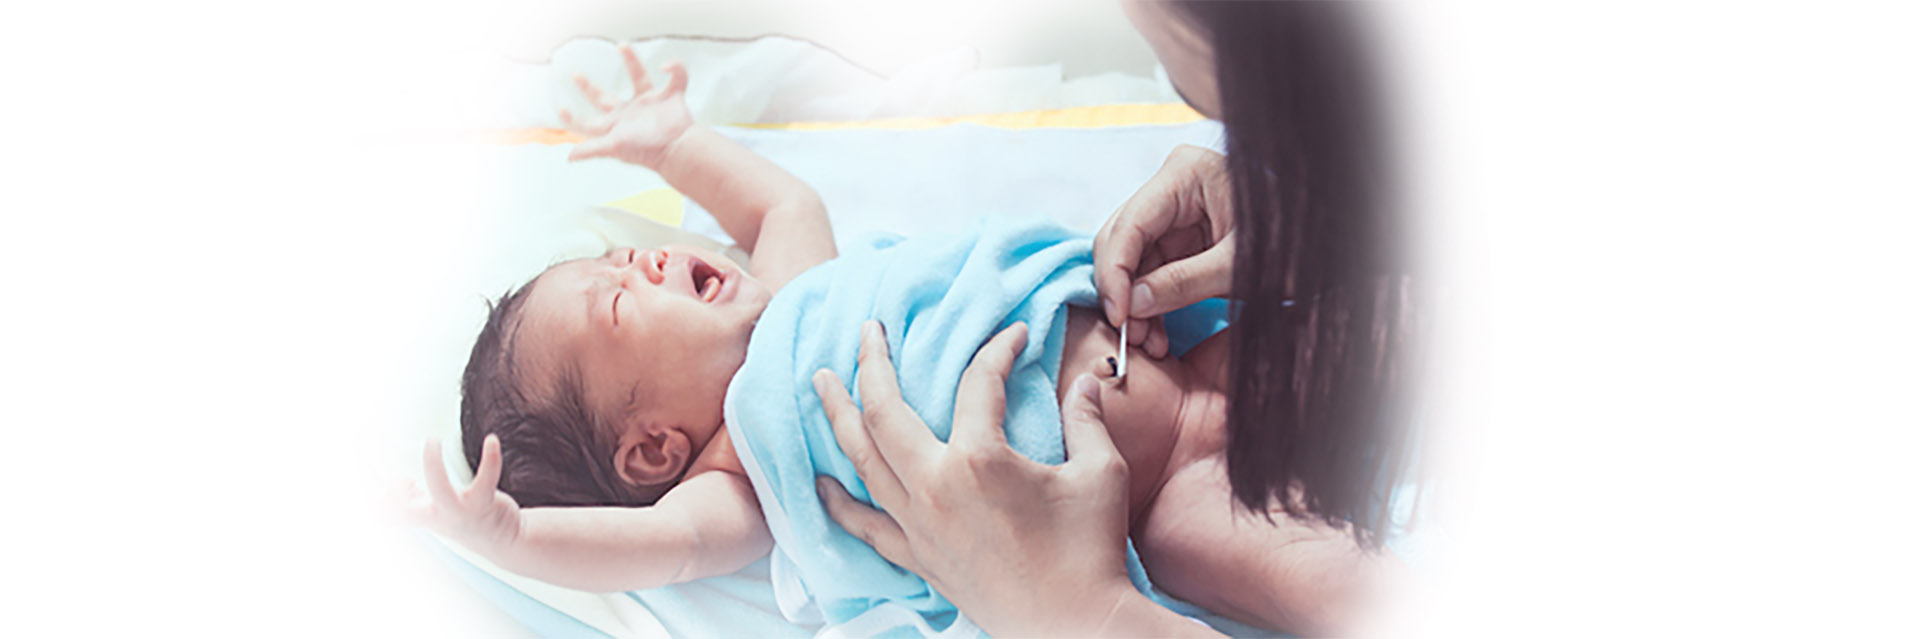 Cleaning newborn umbilical cord